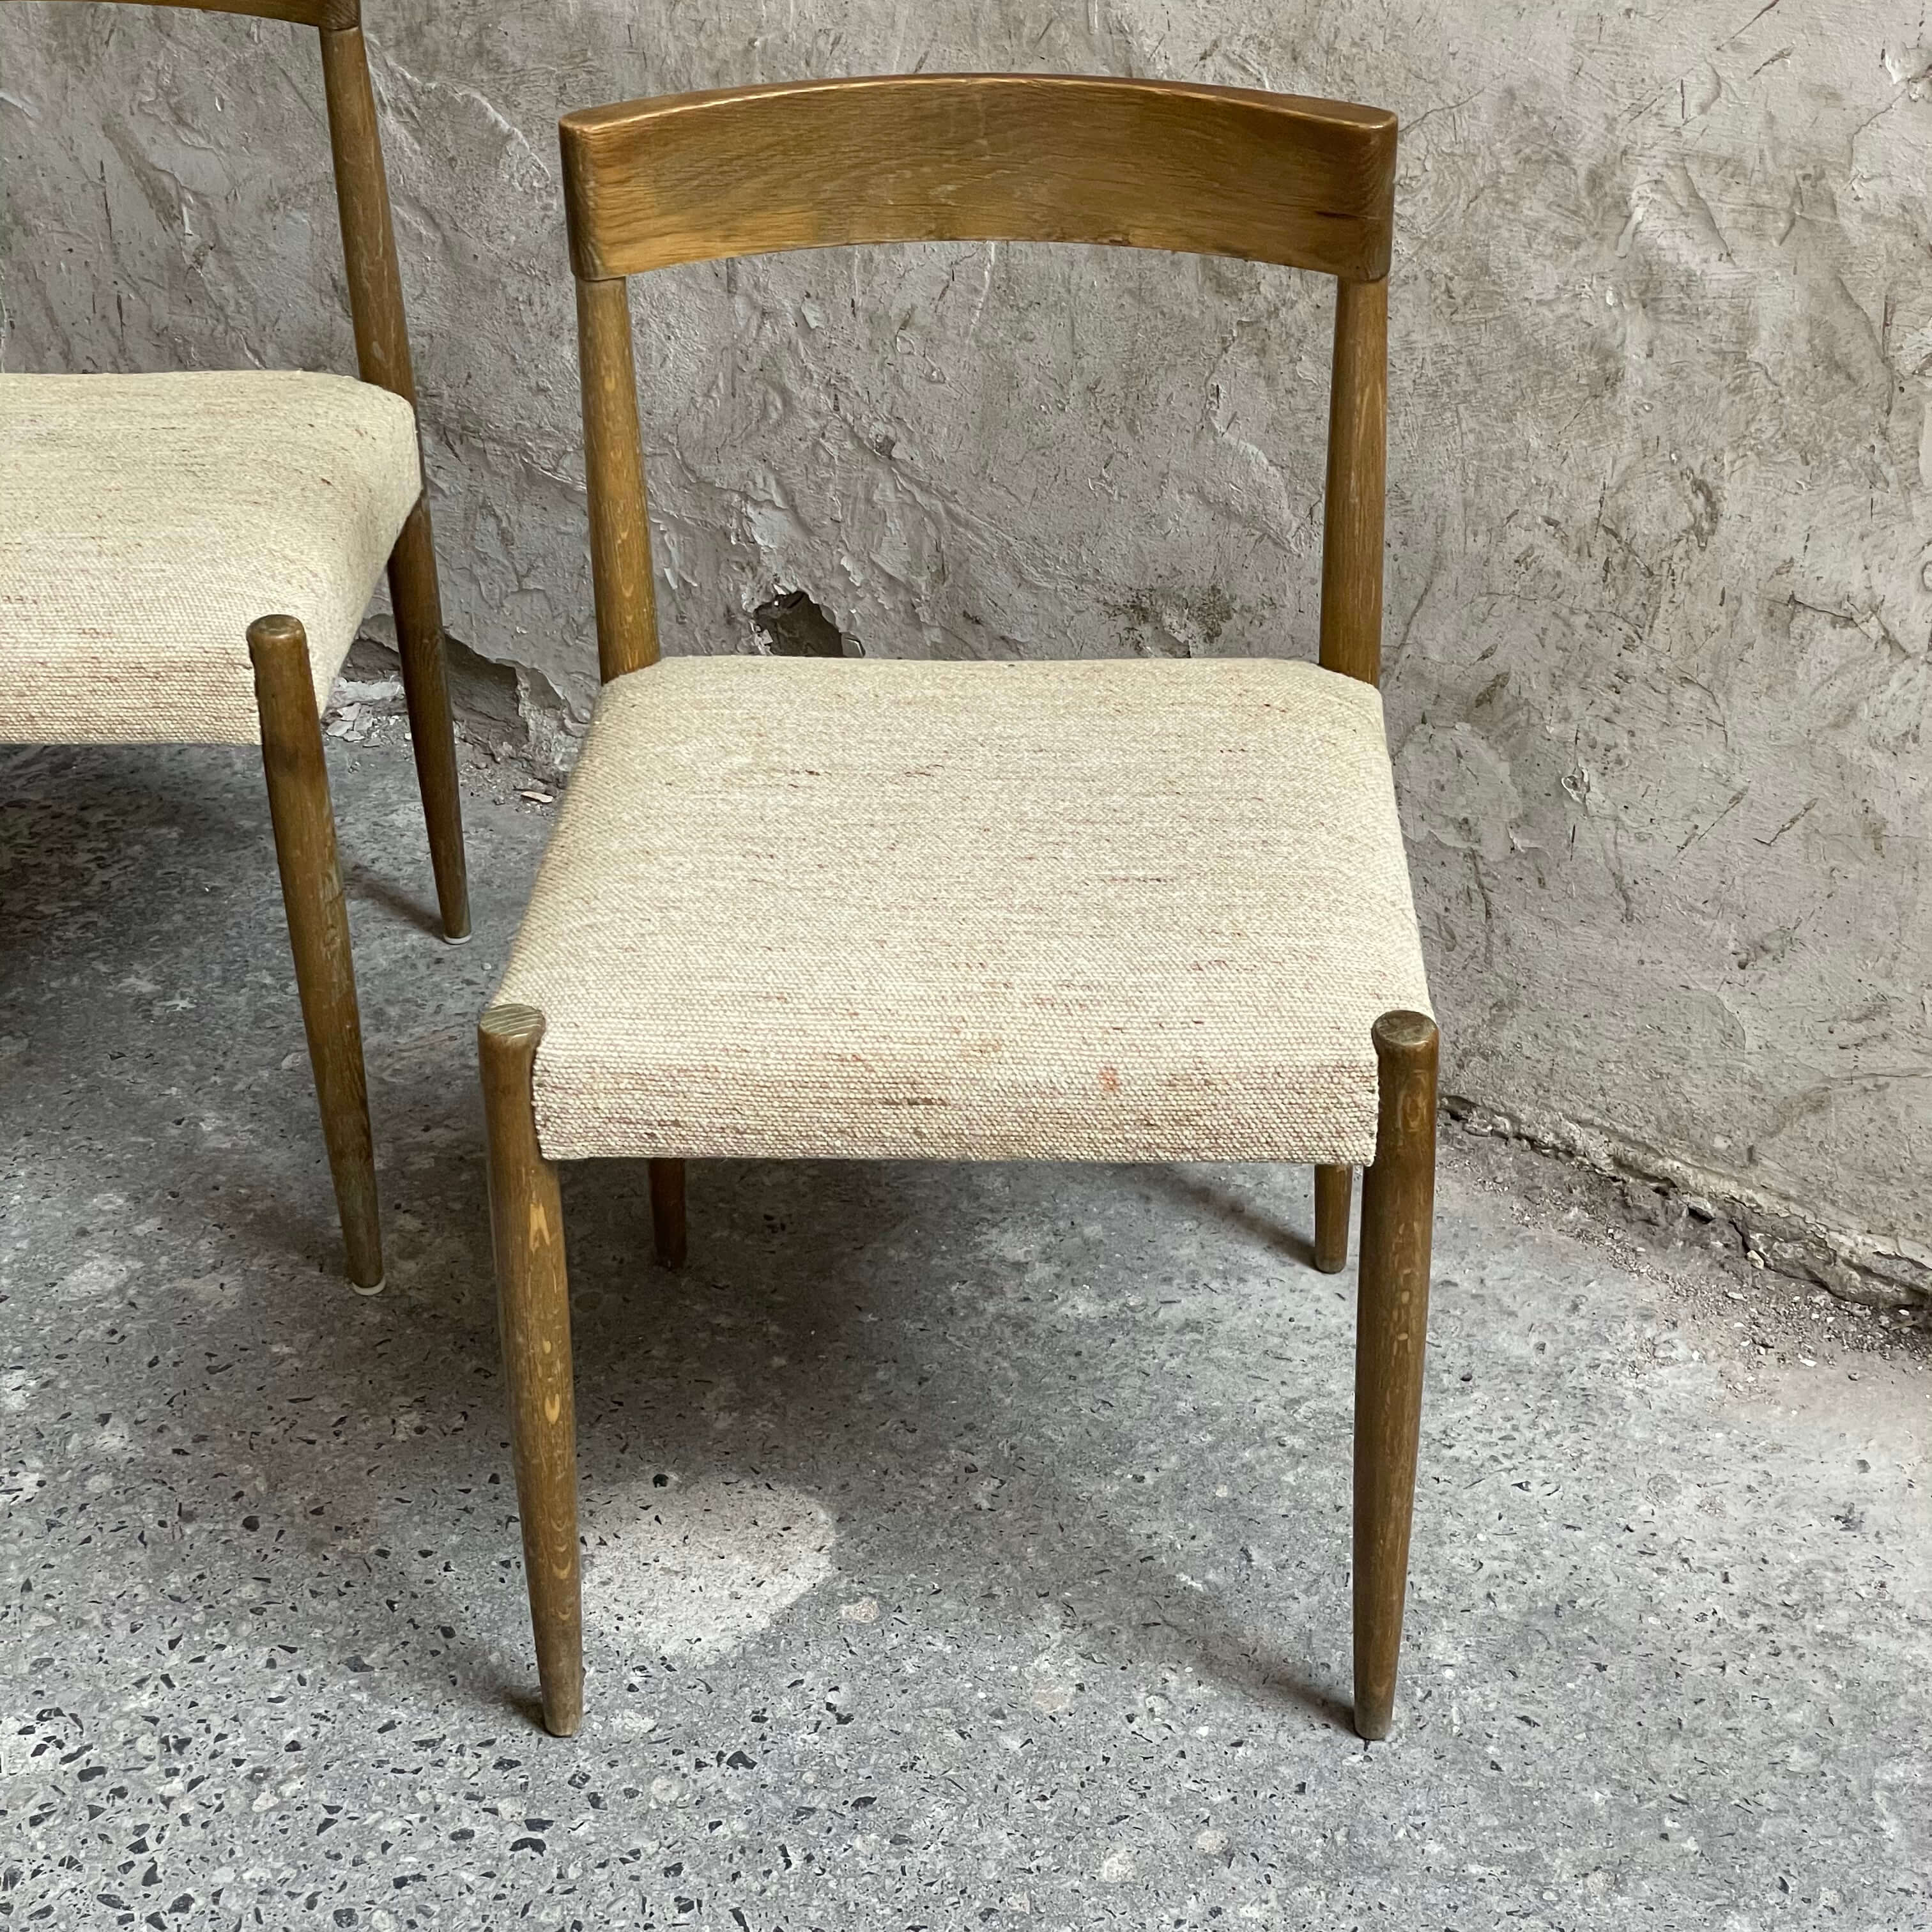 Lubke chairs wood textile vintage german design mid century chair